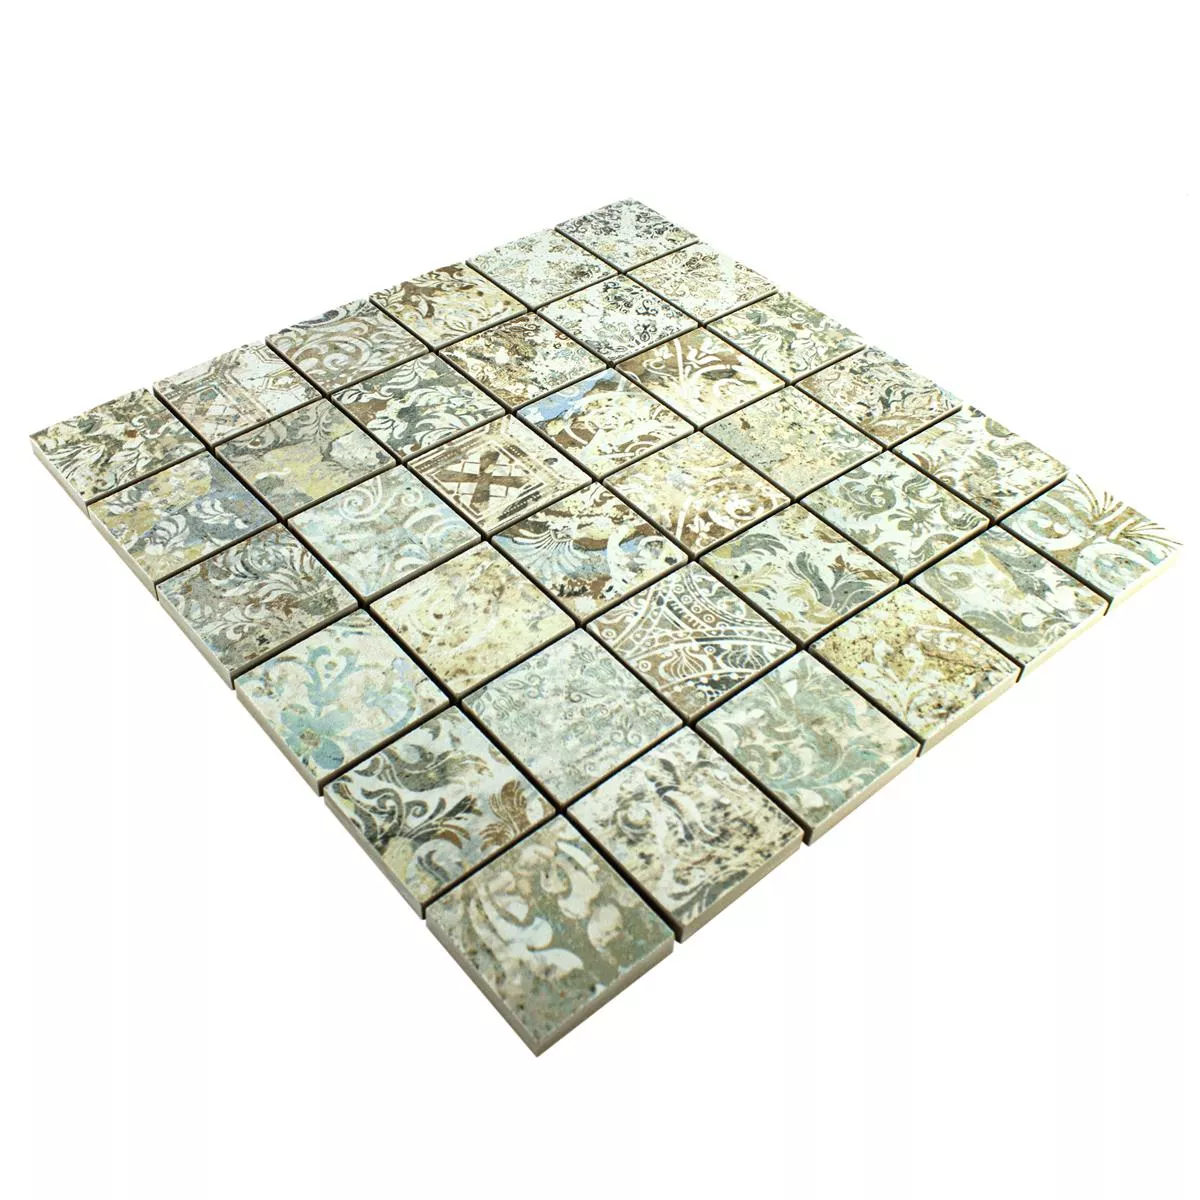 Ceramic Mosaic Tiles Bellona Effect Light Colored 47x47mm